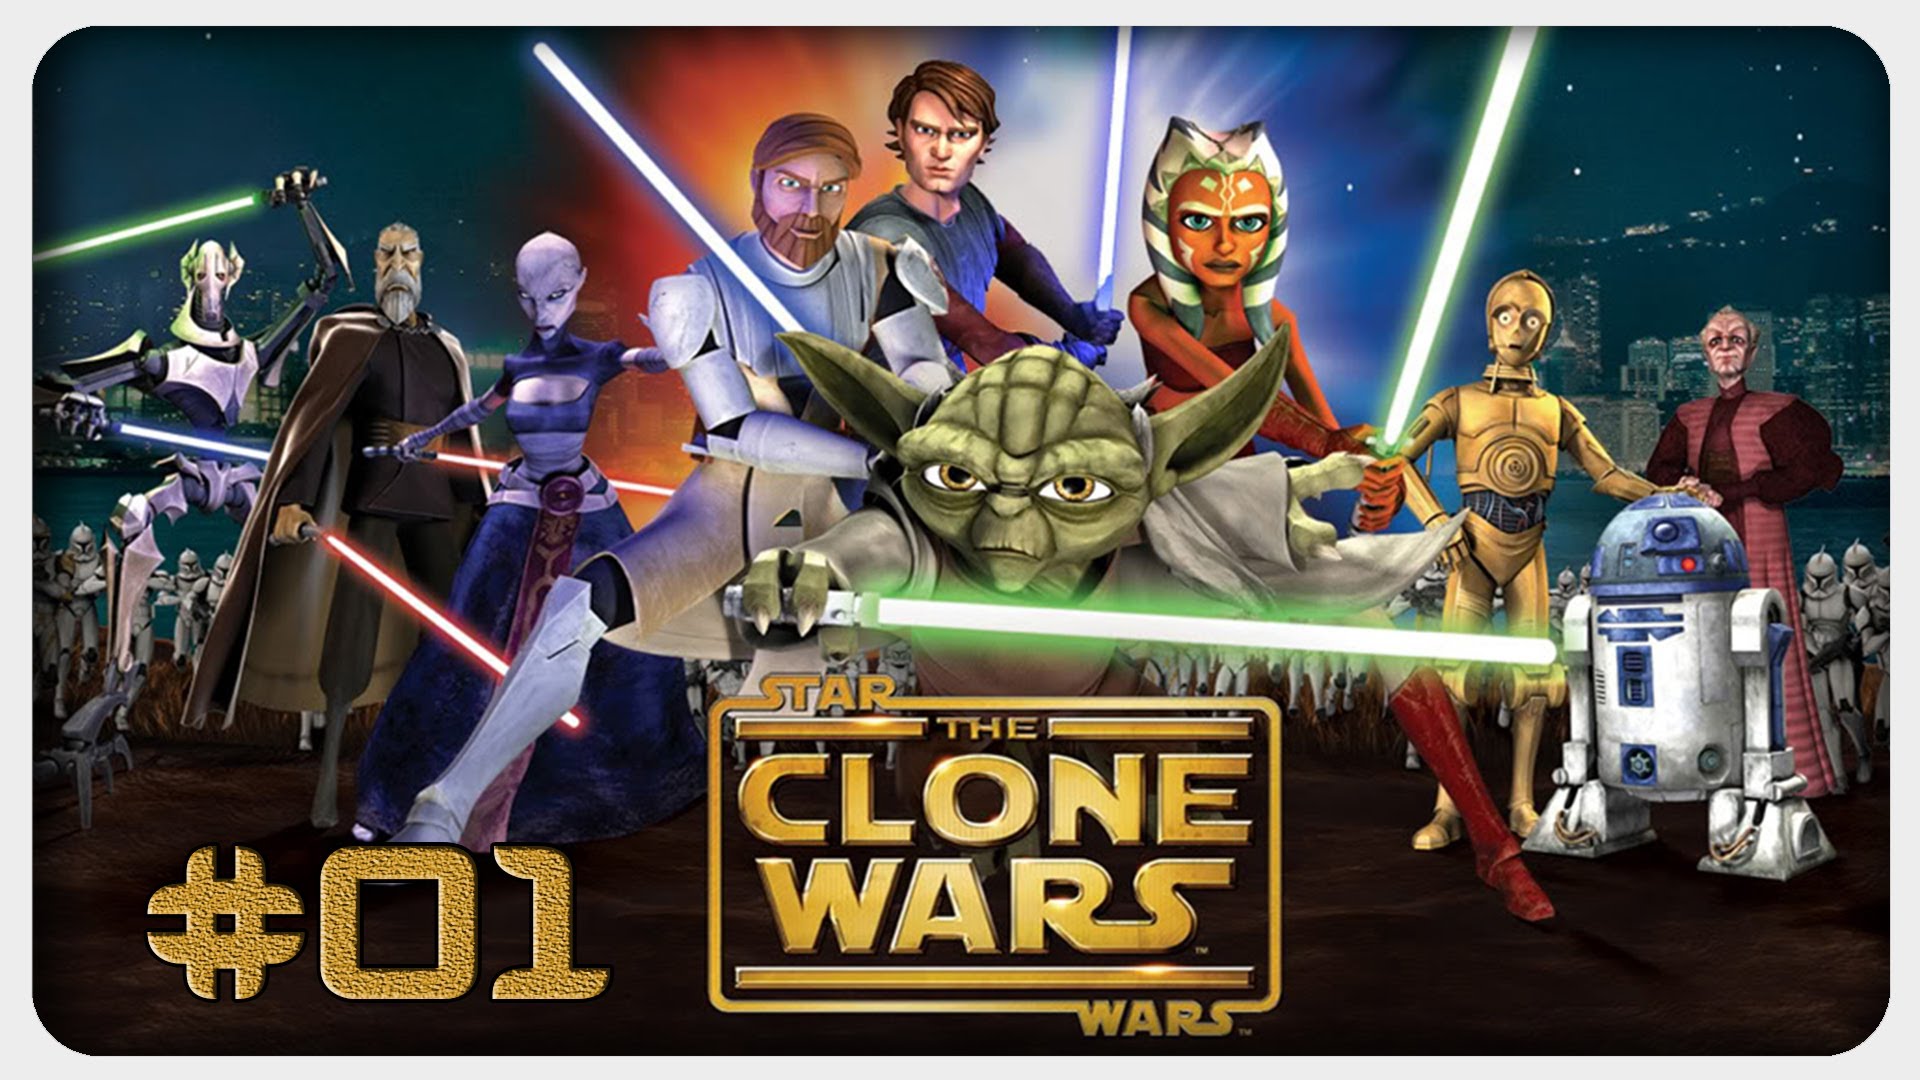 Star Wars: The Clone Wars – Republic Heroes #22